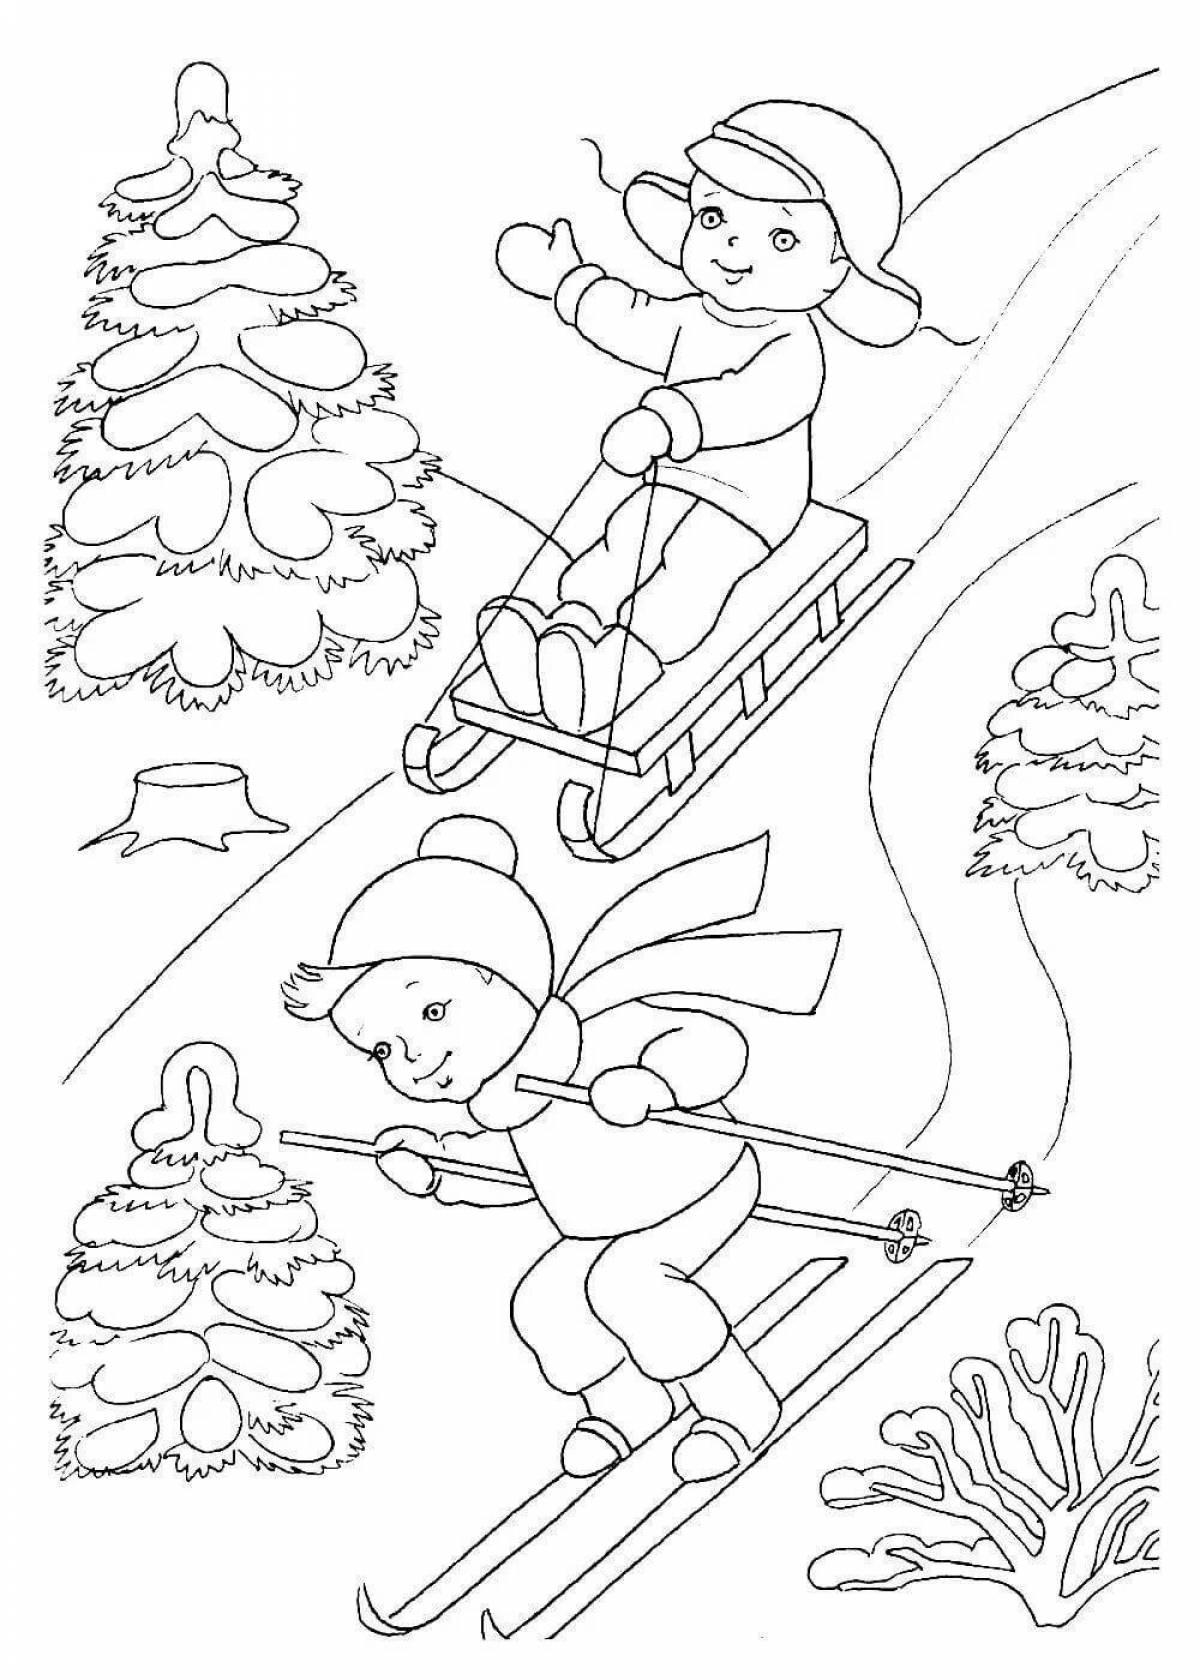 Winter fun coloring book for children 3-4 years old in kindergarten